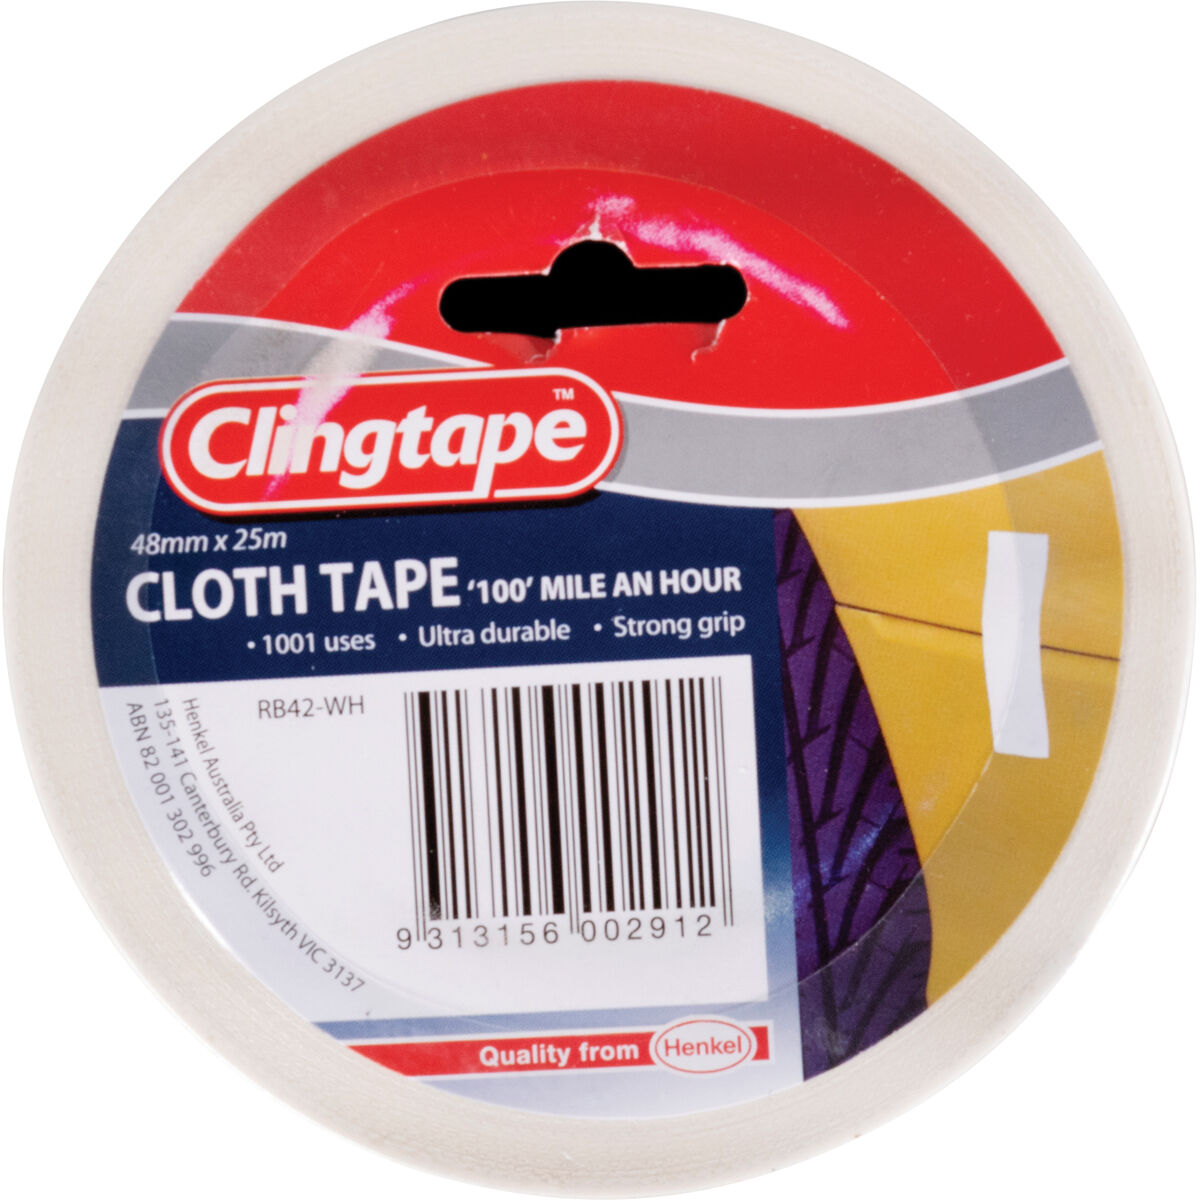 Clingtape White Cloth Tape 48mm x 25m, , scaau_hi-res